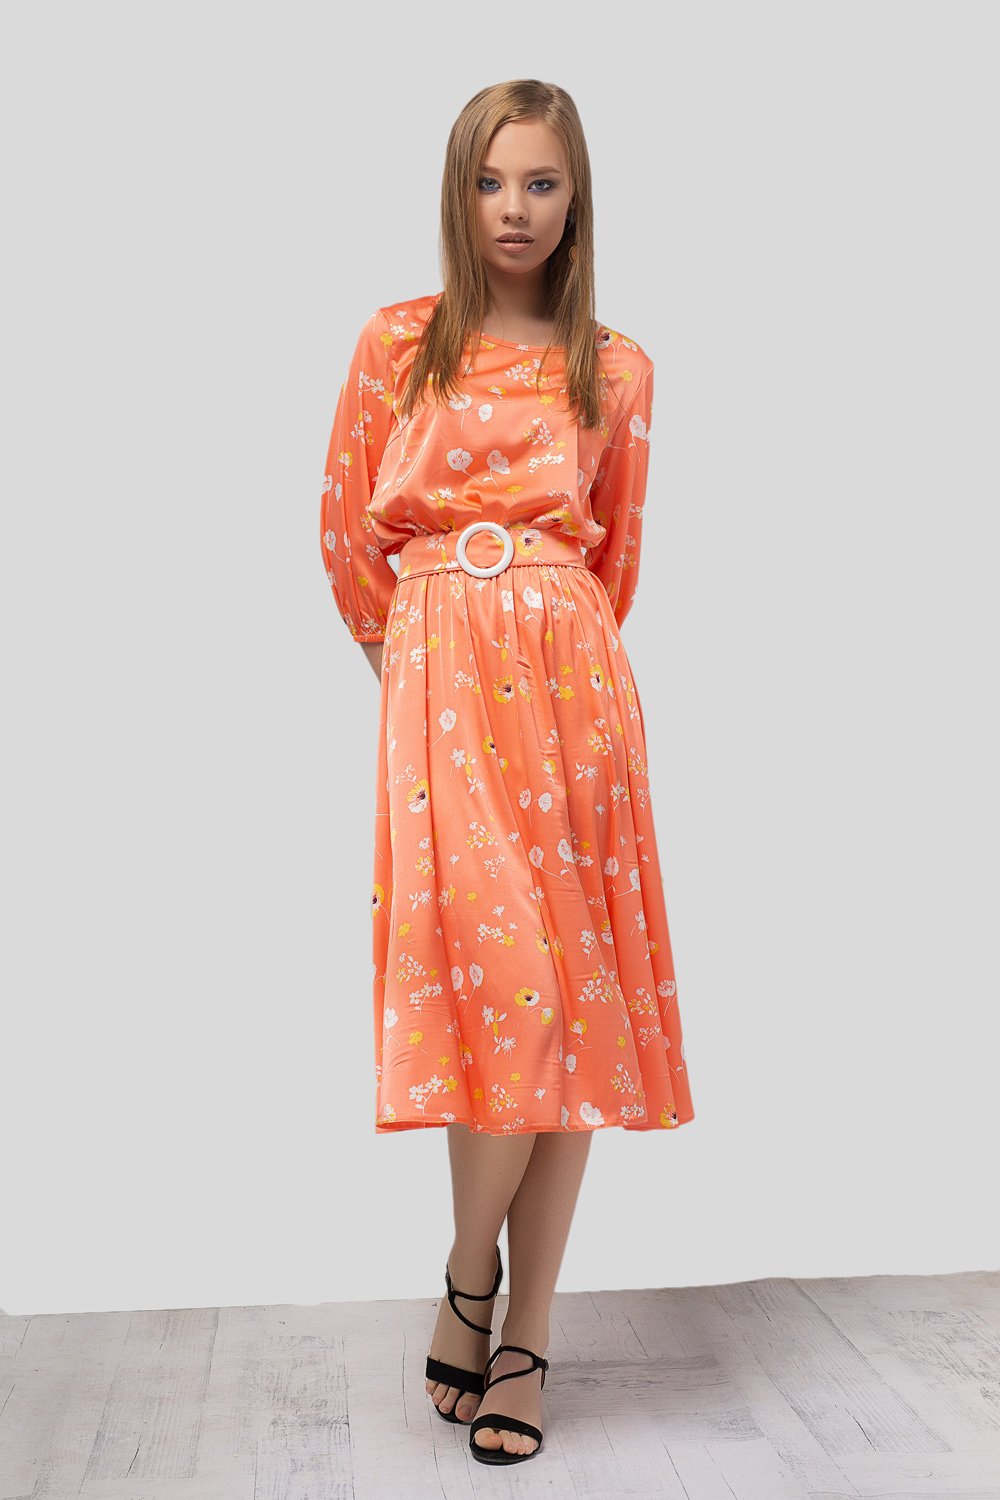 Coral silk dress